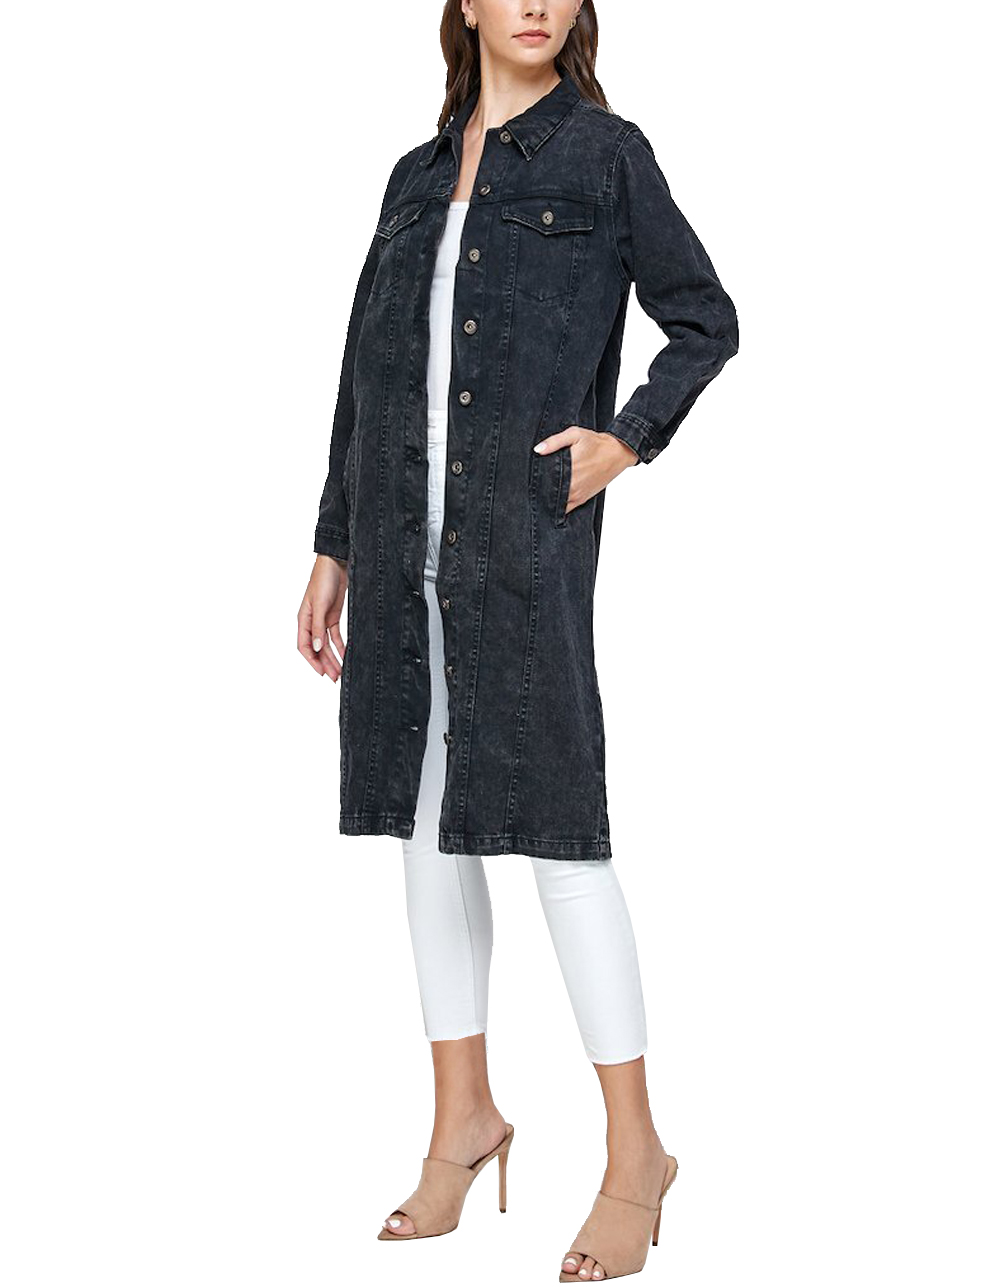 Women's Long Casual Maxi Length Denim Cotton Coat Oversize Button Up Jean Jacket (Mineral Black, M) - image 3 of 6